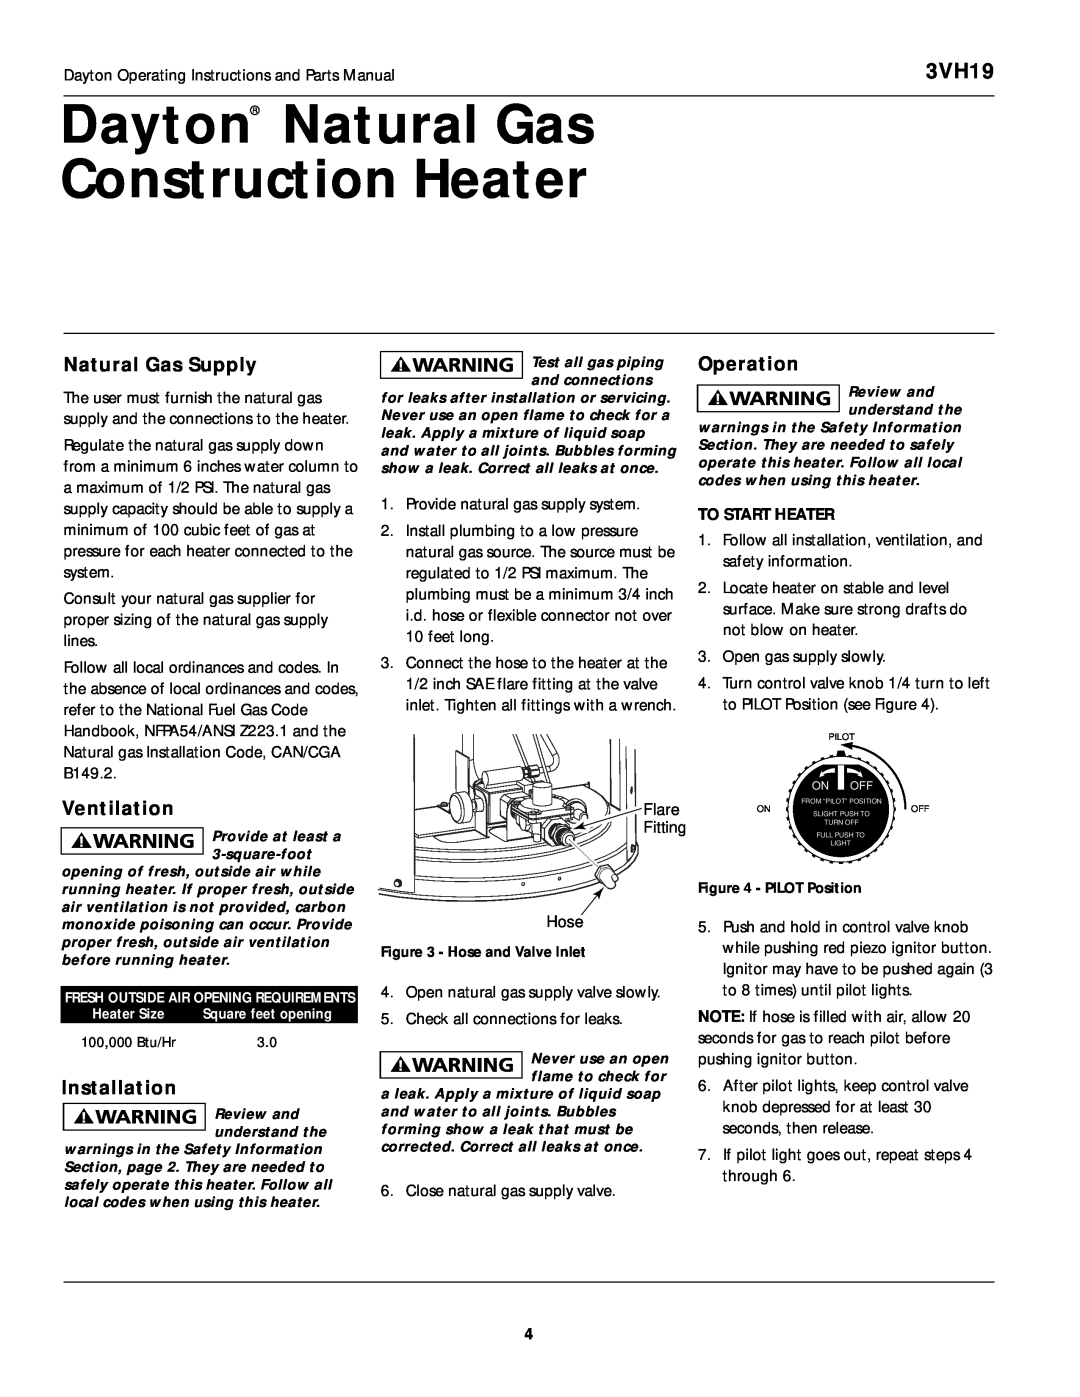 Dayton 3VH19 manual Dayton Natural Gas Construction Heater, Natural Gas Supply, Operation, Ventilation, Installation, Flare 